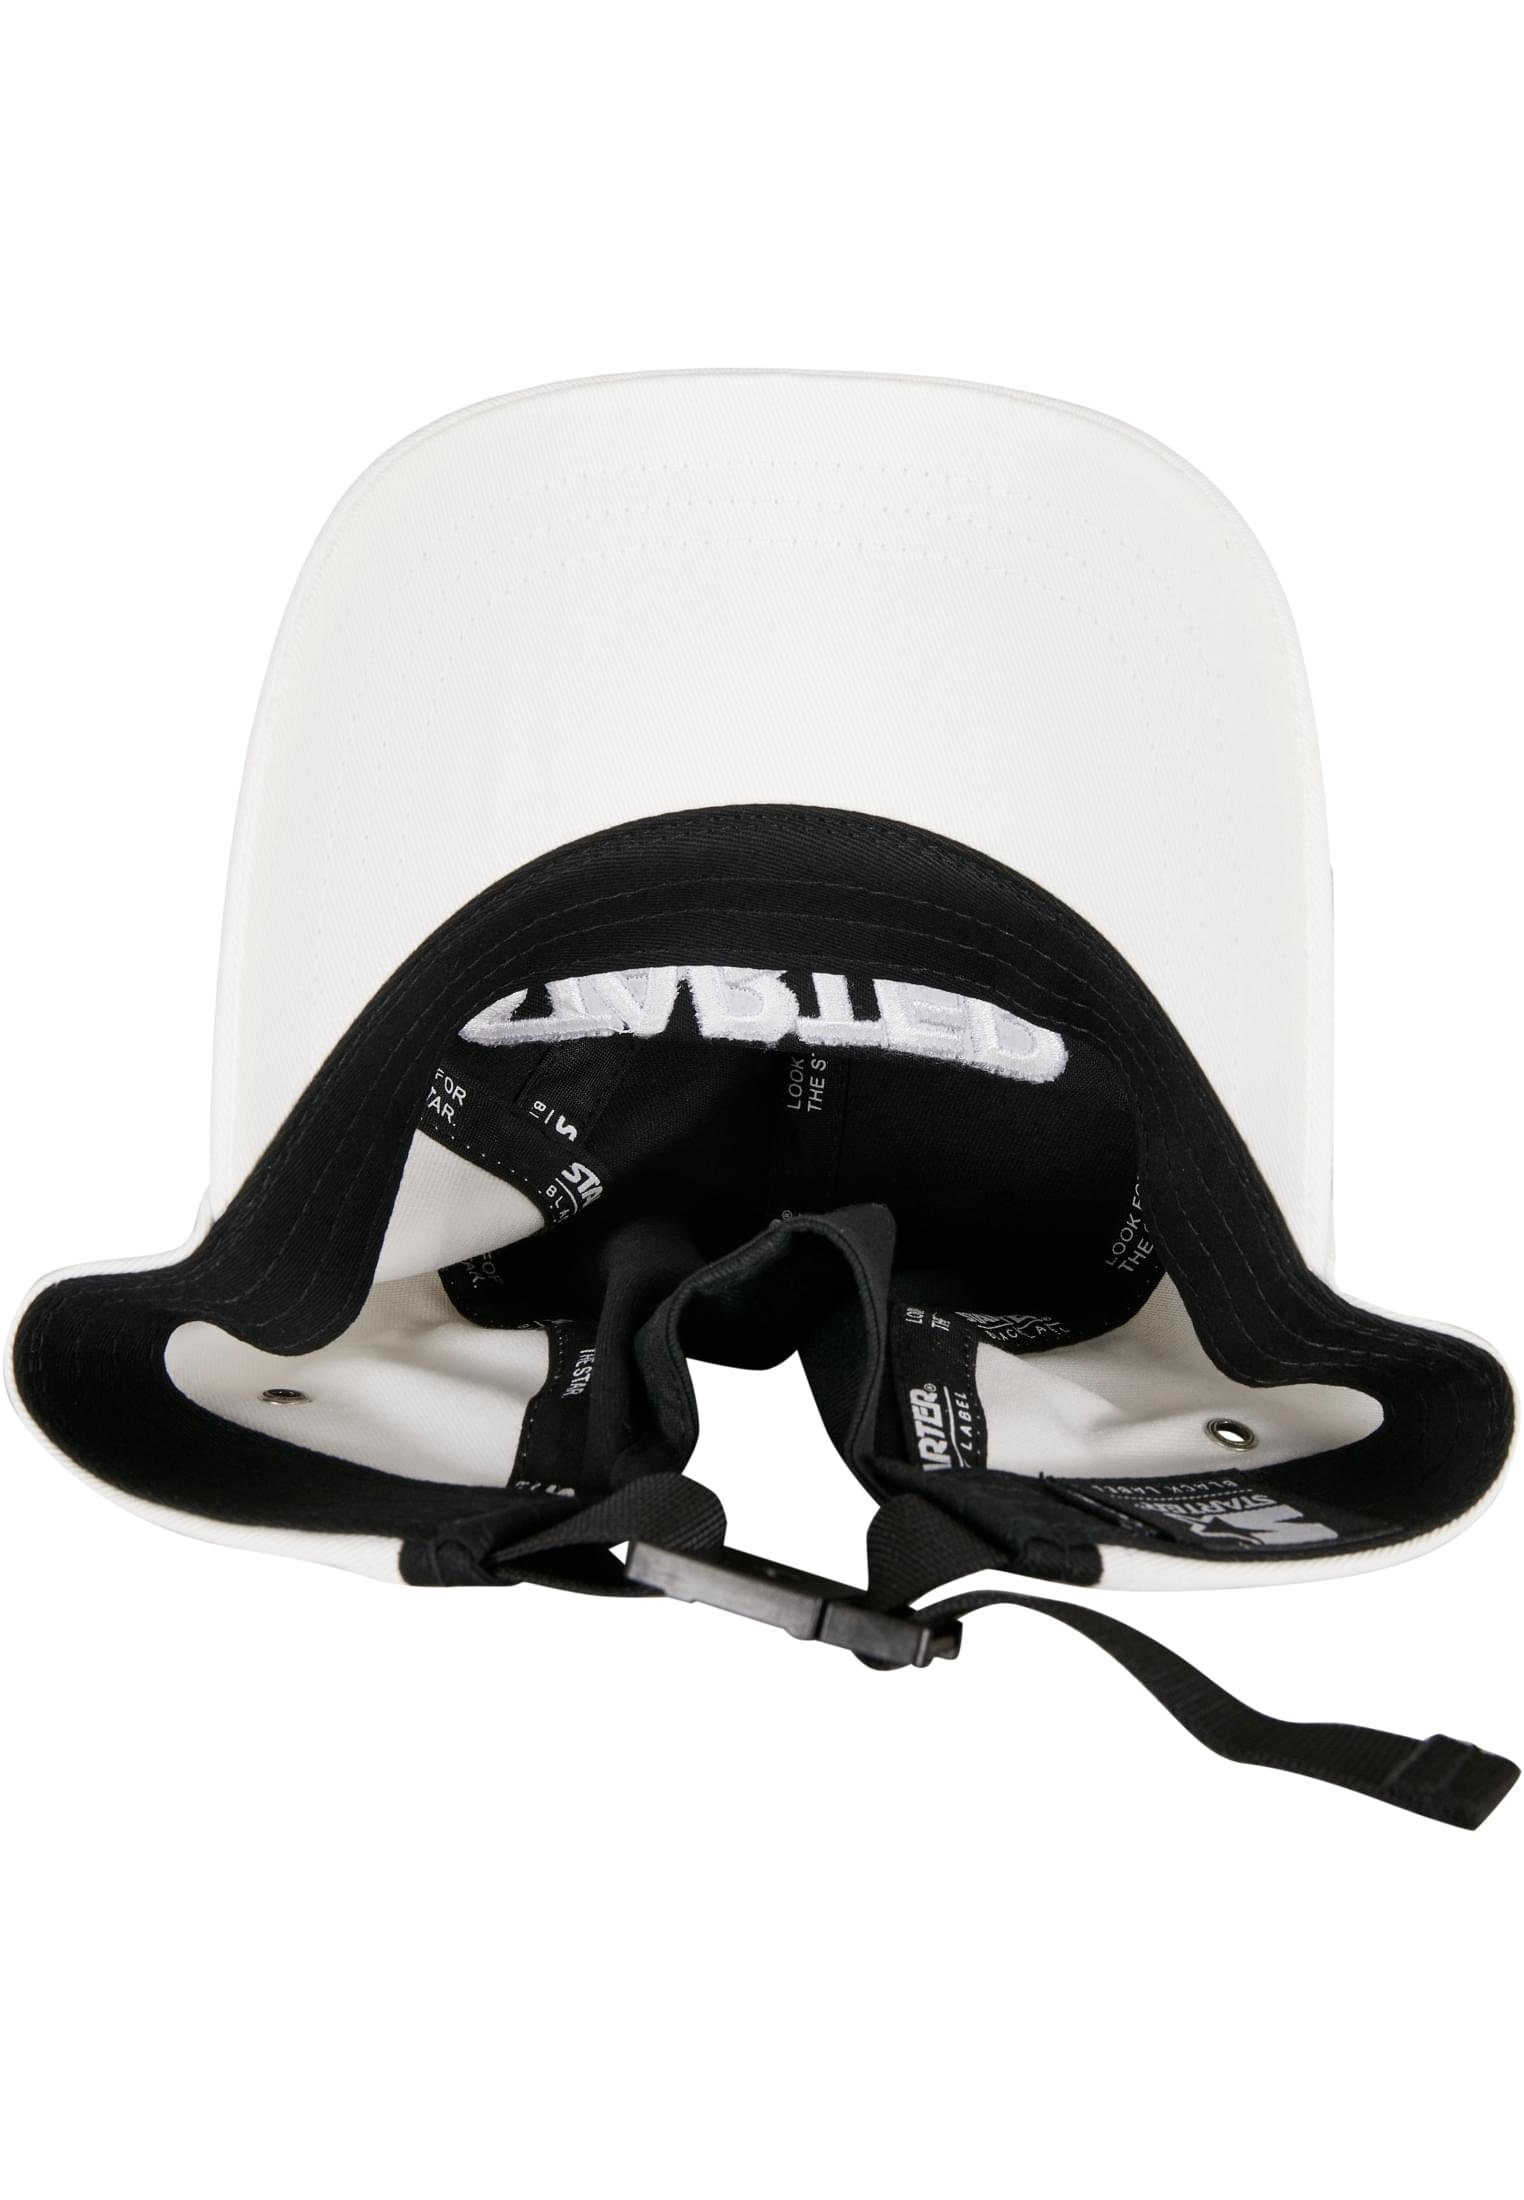 Label Snapback Black Starter black/white Cap Accessoires Fresh Cap Jockey